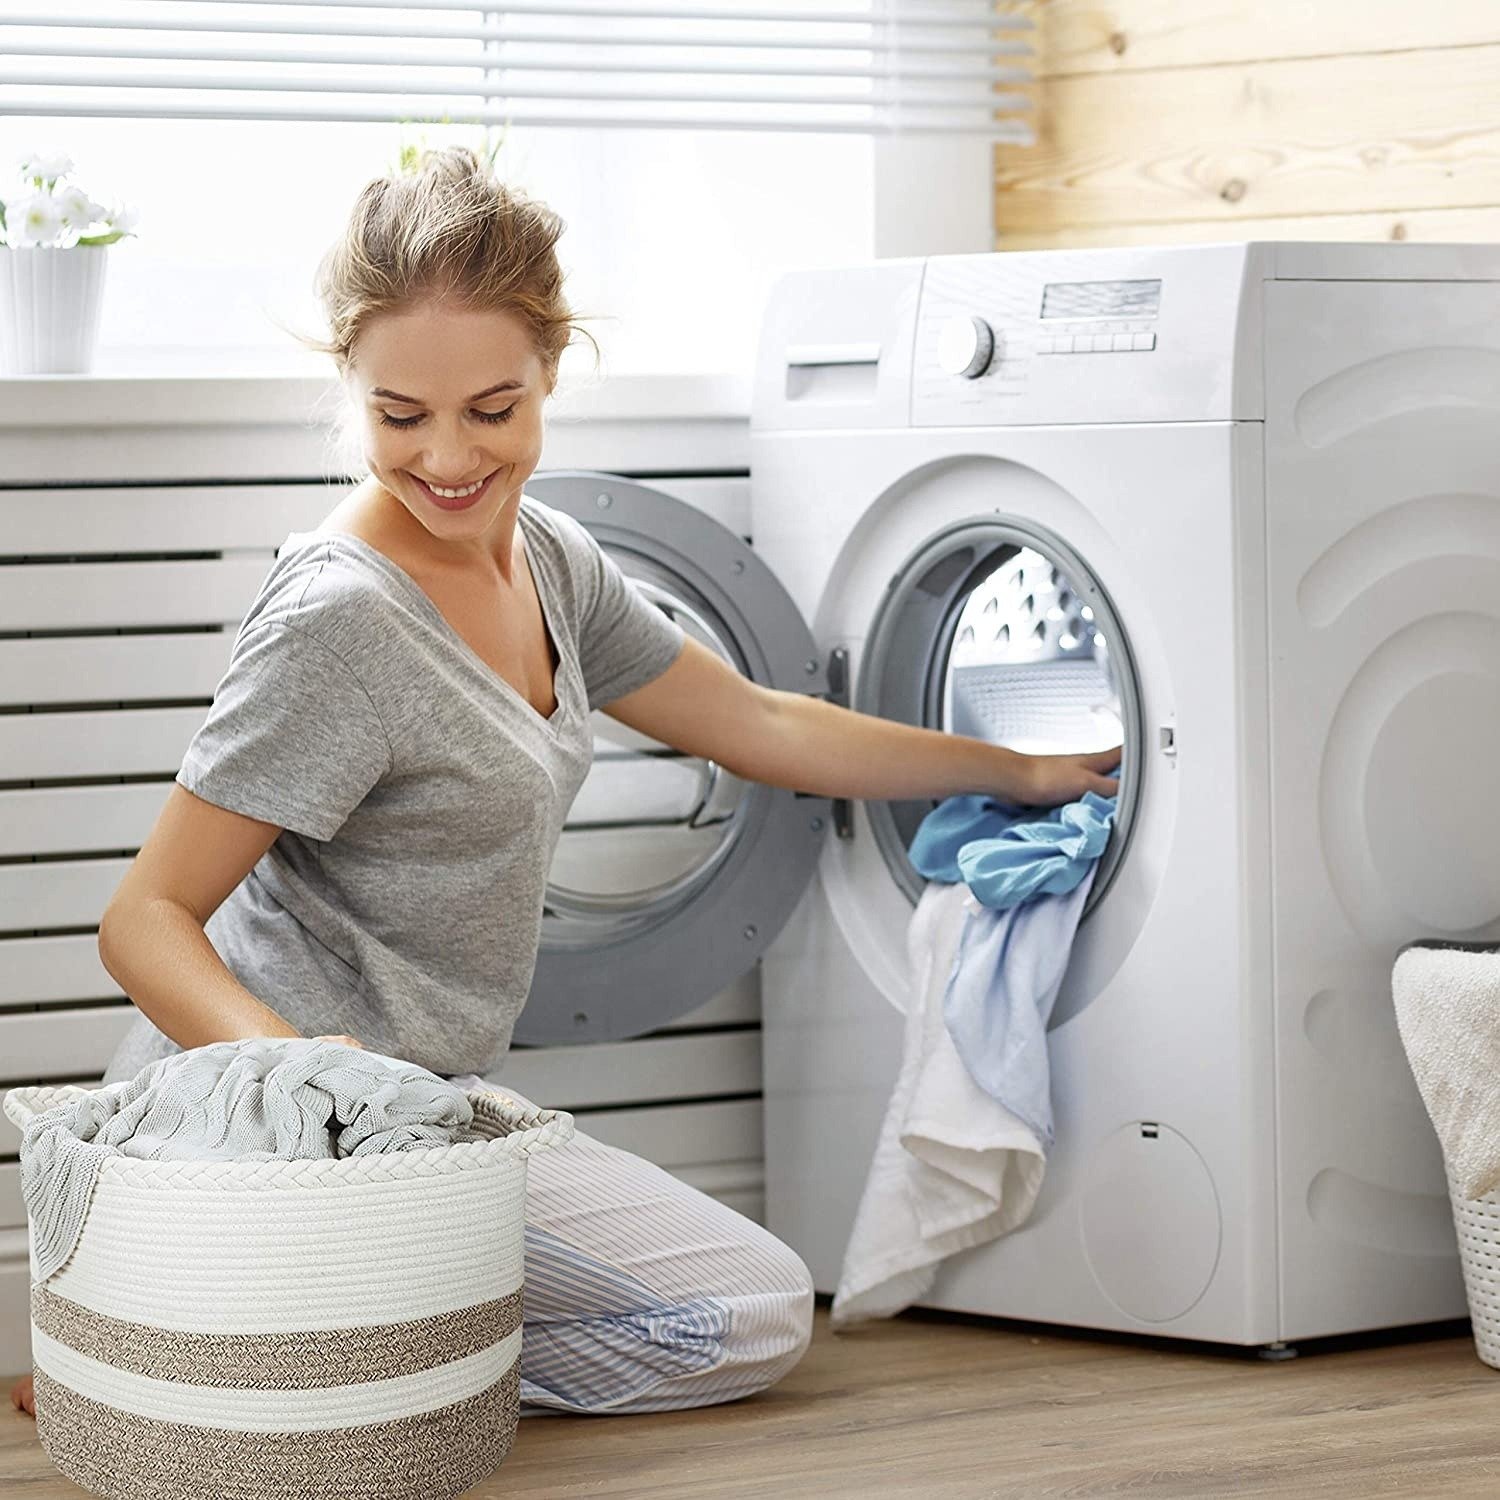 Basic Washing Machine Maintenance Tips: How To Extend Washing Machine’s Life